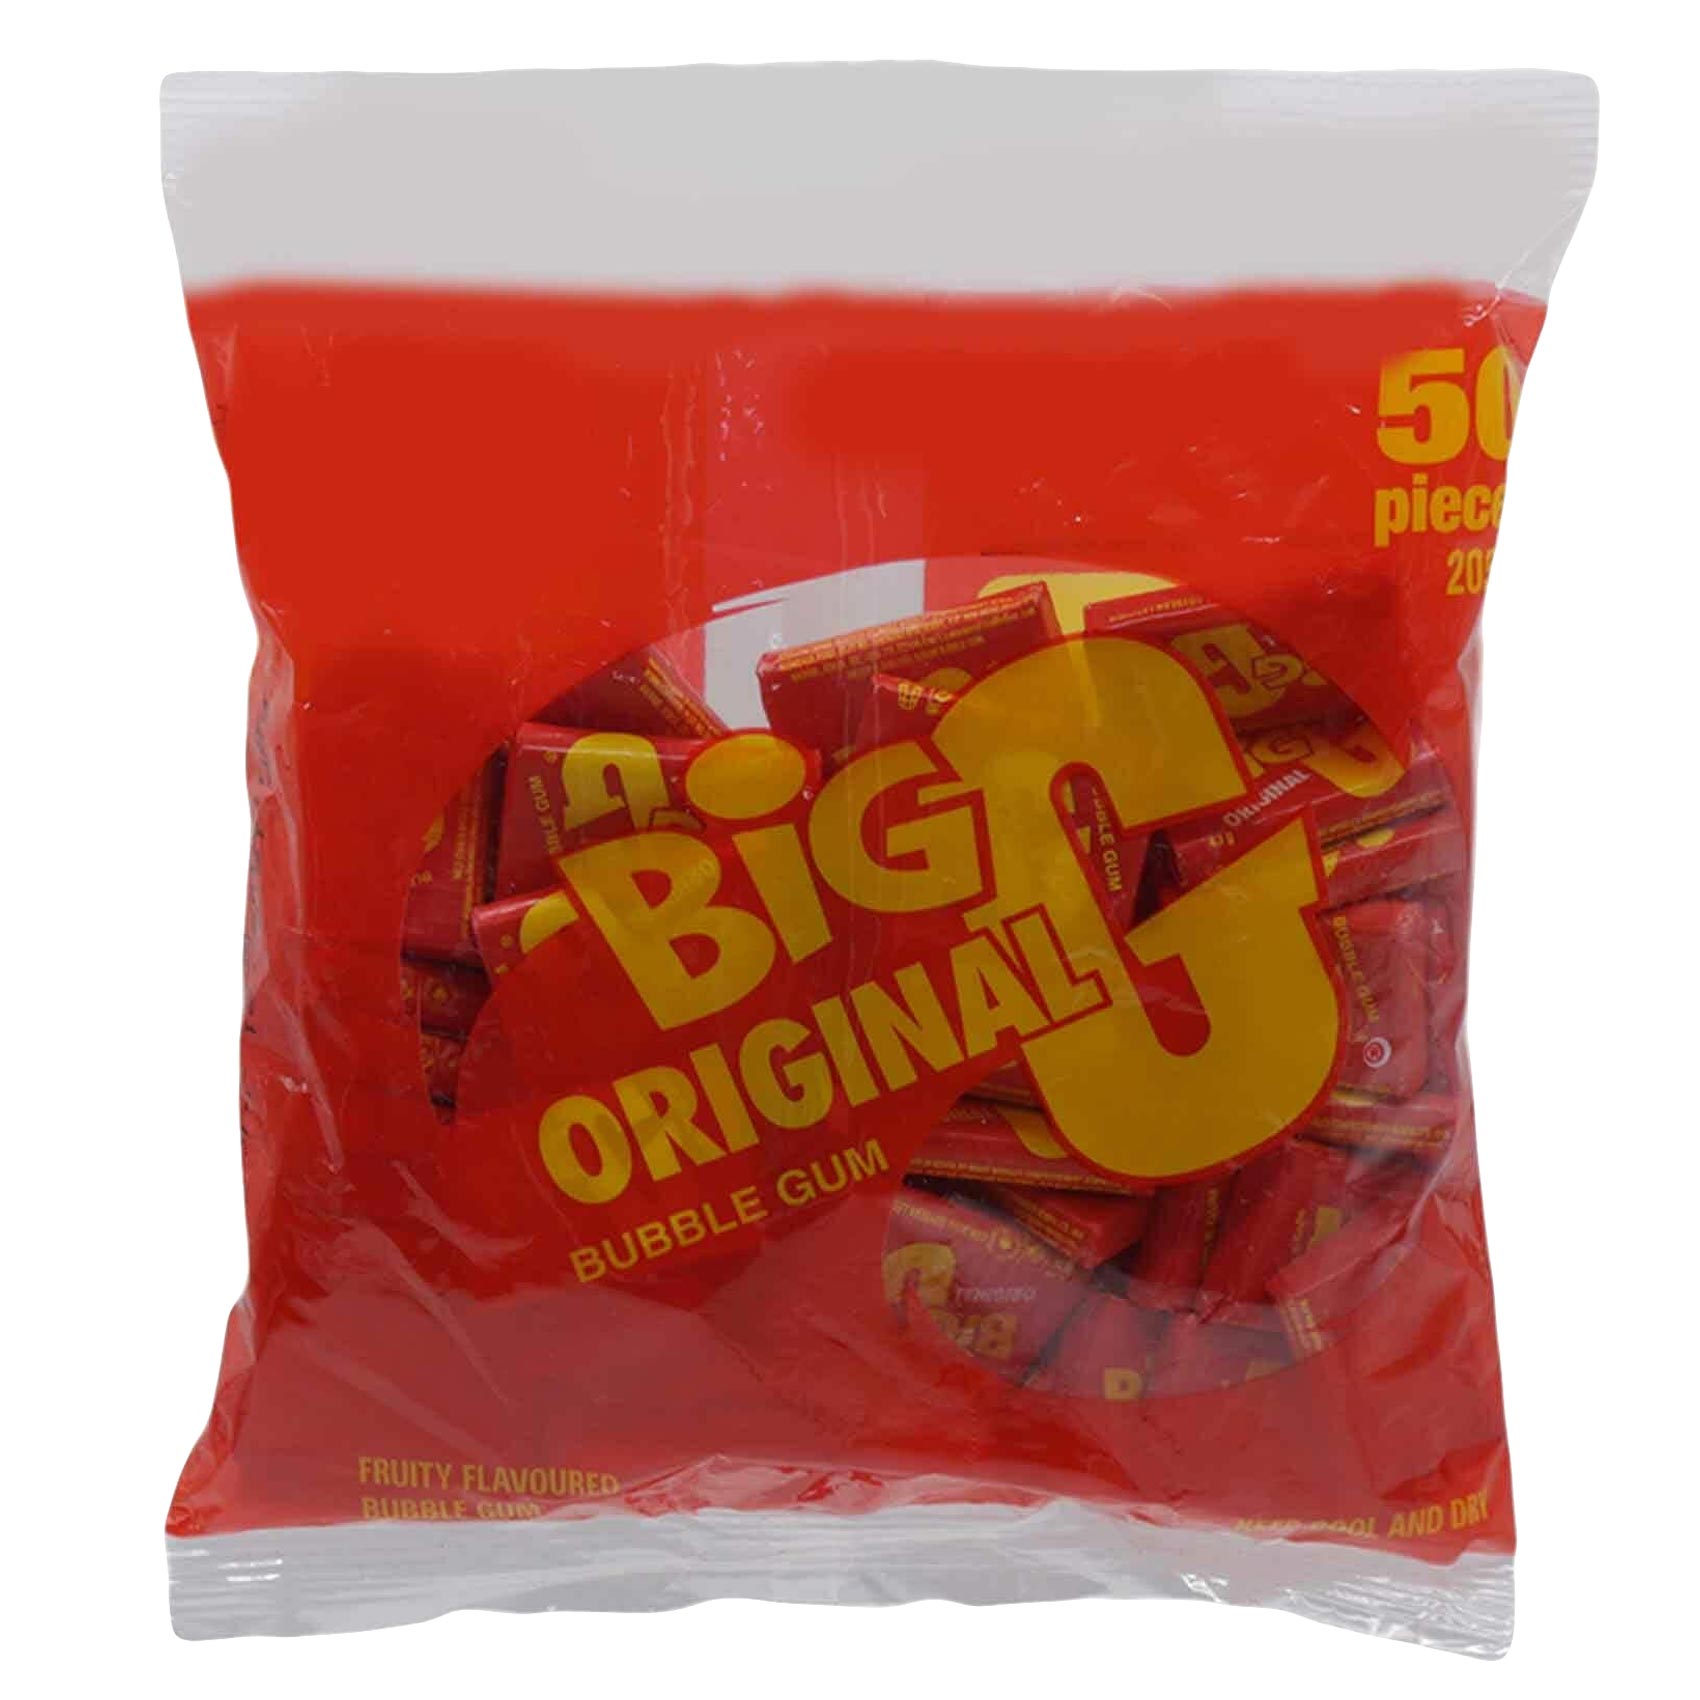 Big G Original Bubble Gum 50 Pieces